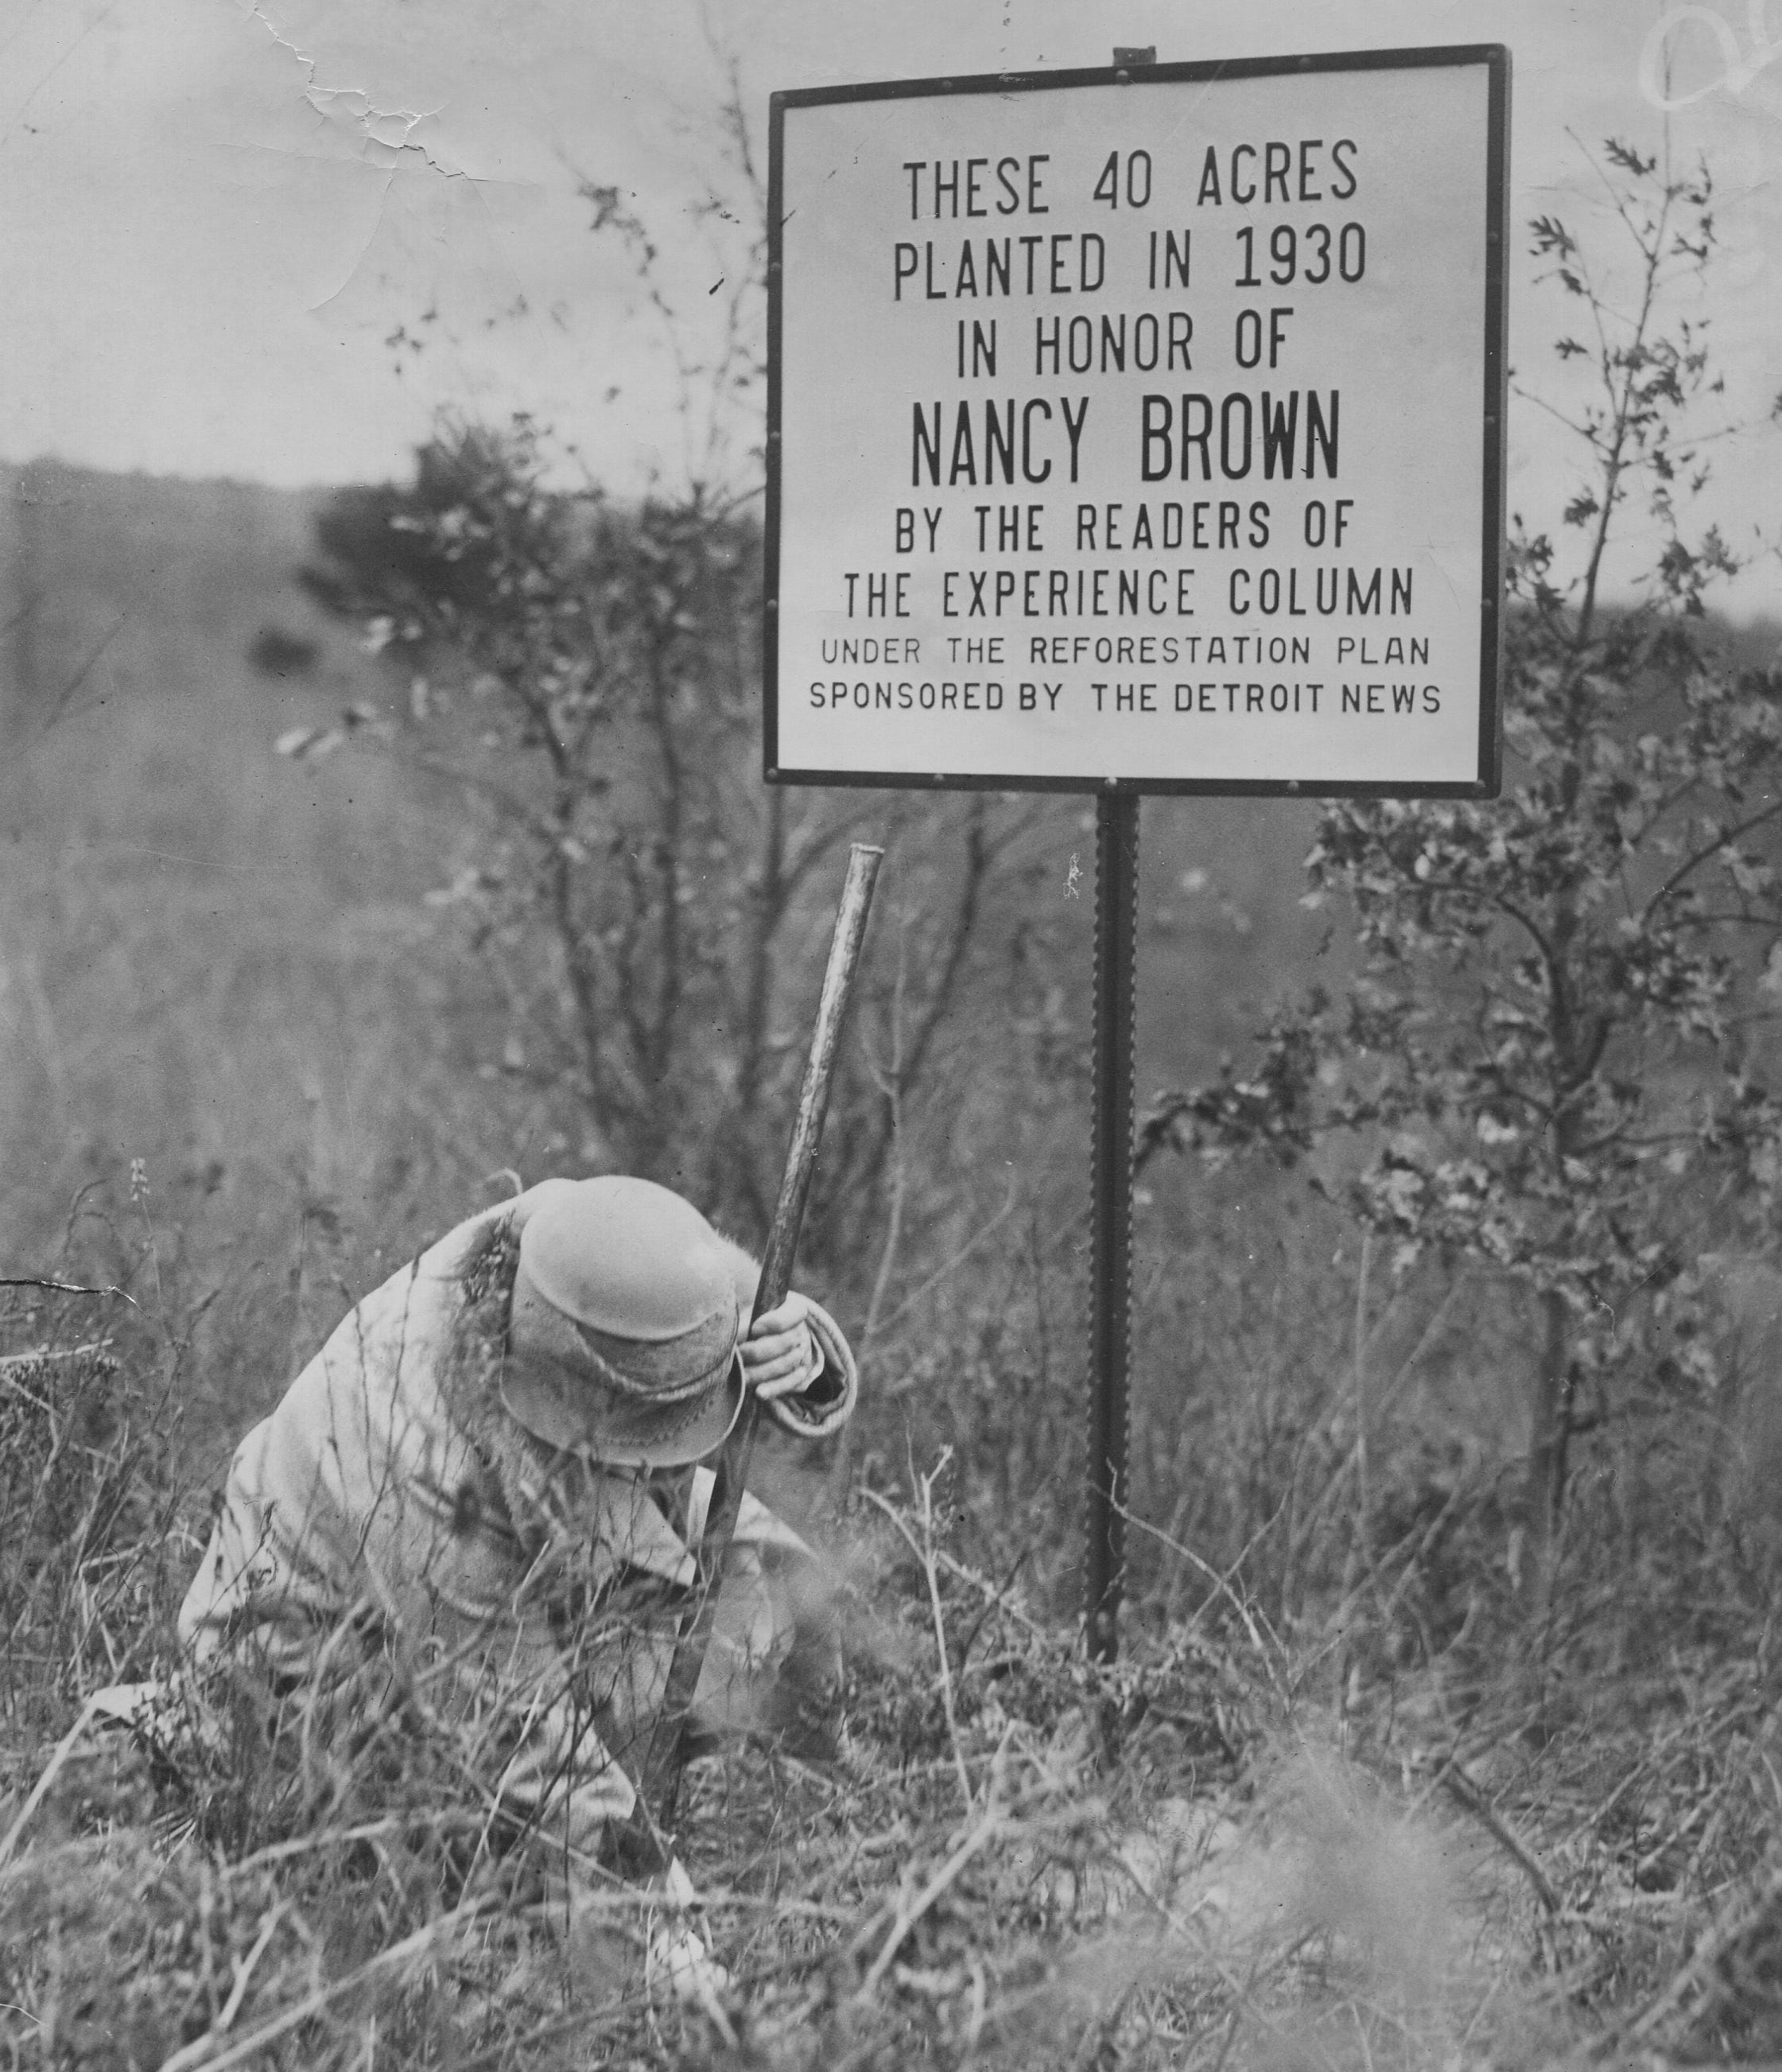 Detroit News columnist Nancy Brown is shown planting trees in northern Michigan in 1930.